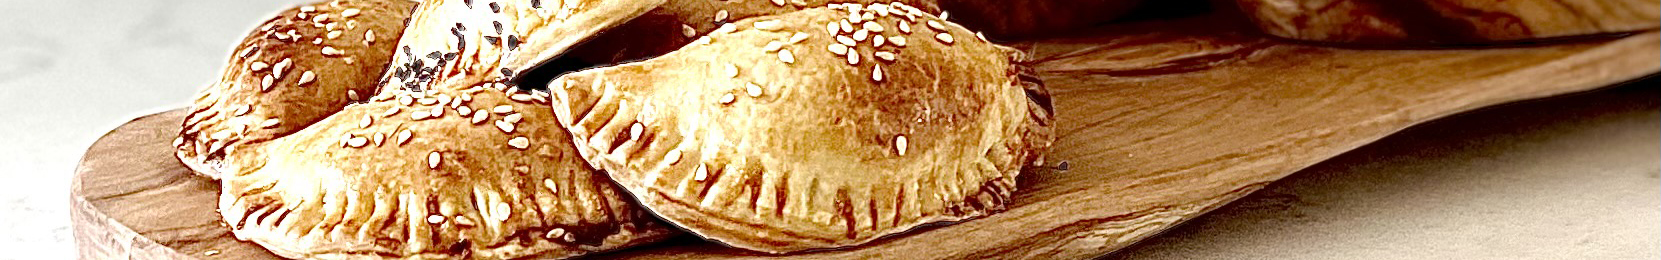 Argentinian Beef Empanadas on Olive Wood Board